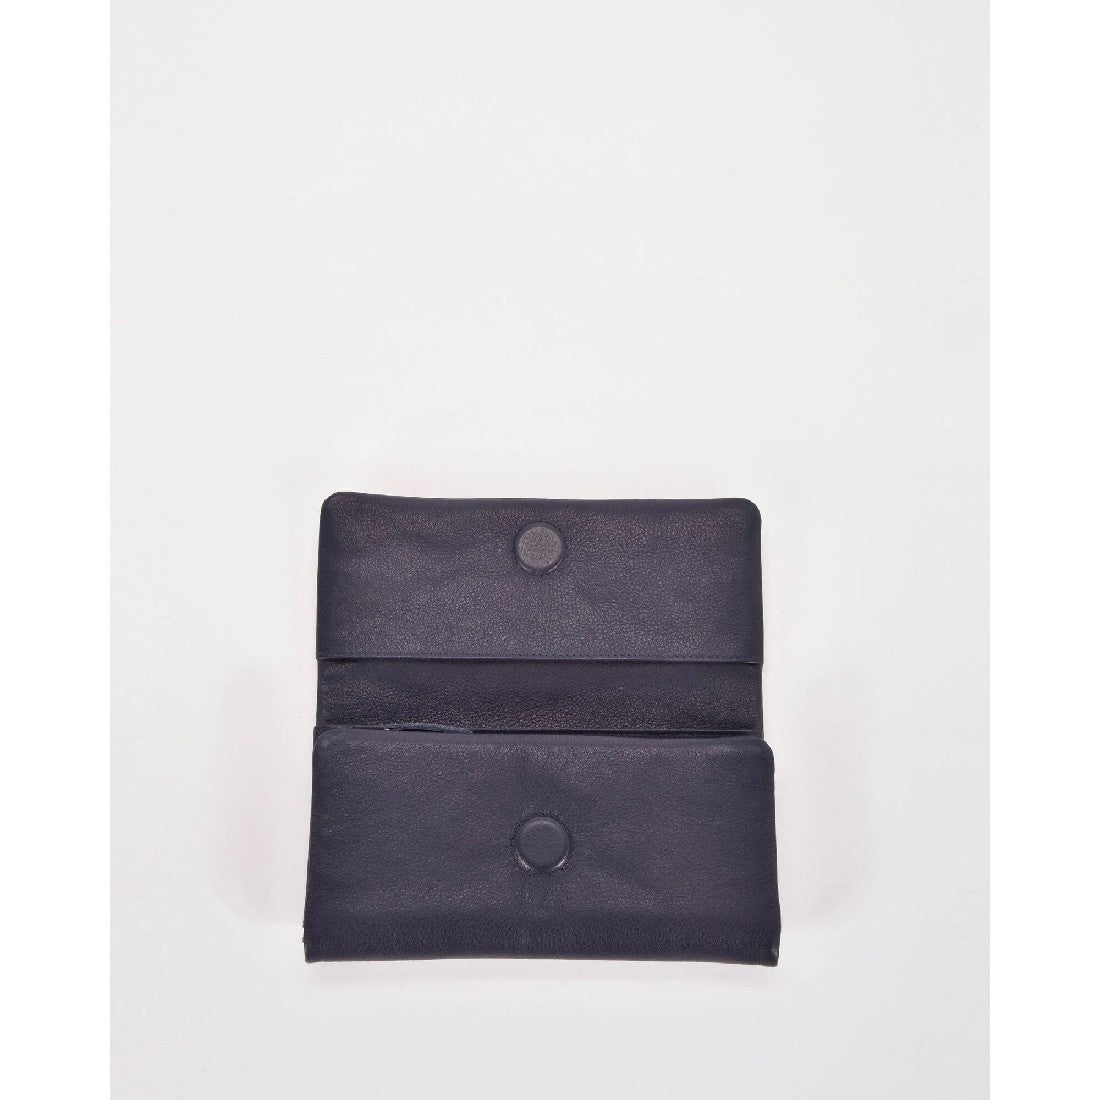 Gabee Nina Leather Wallet [COLOUR:Black]